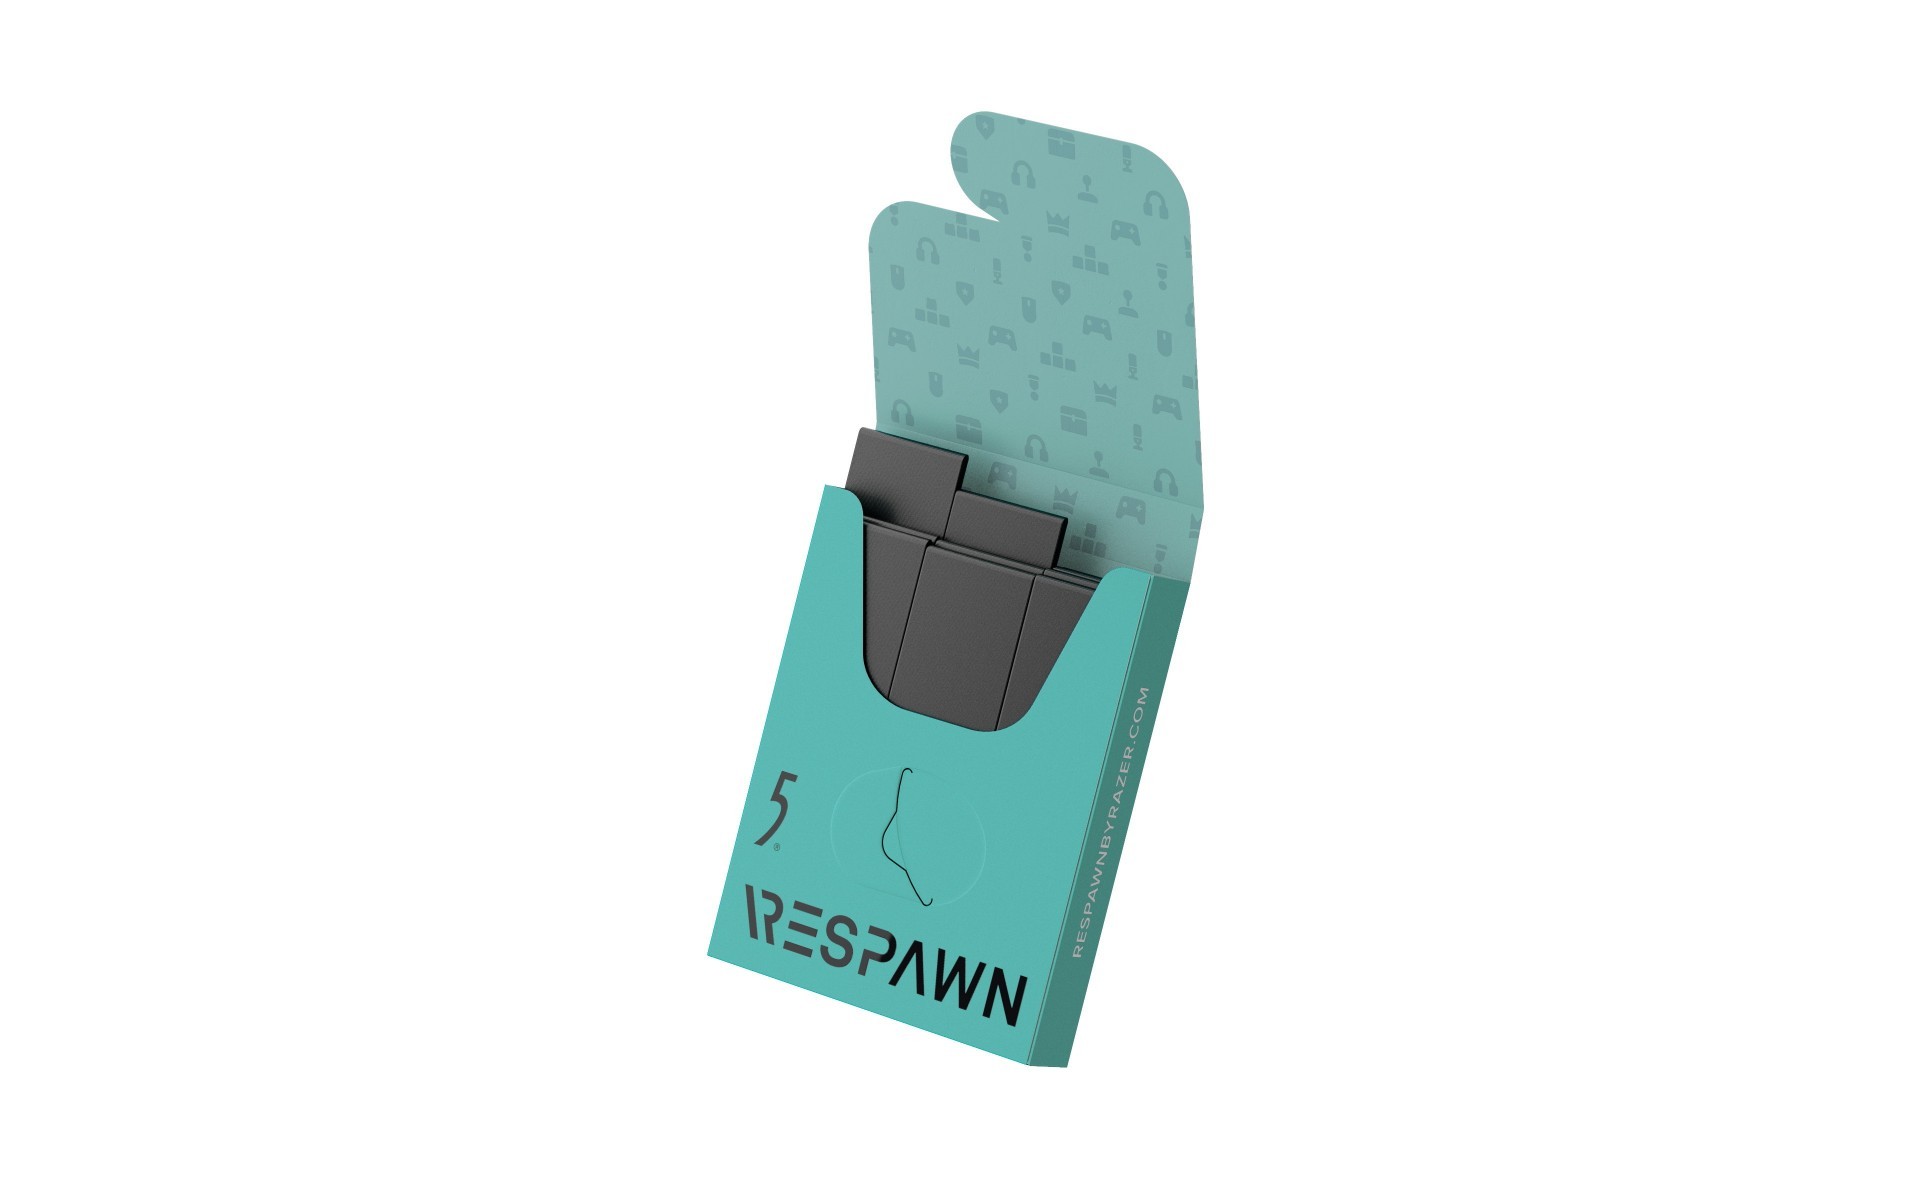 Razer 宣布推出電競口香糖「RESPAWN By 5」 強調提升玩家遊戲集中力